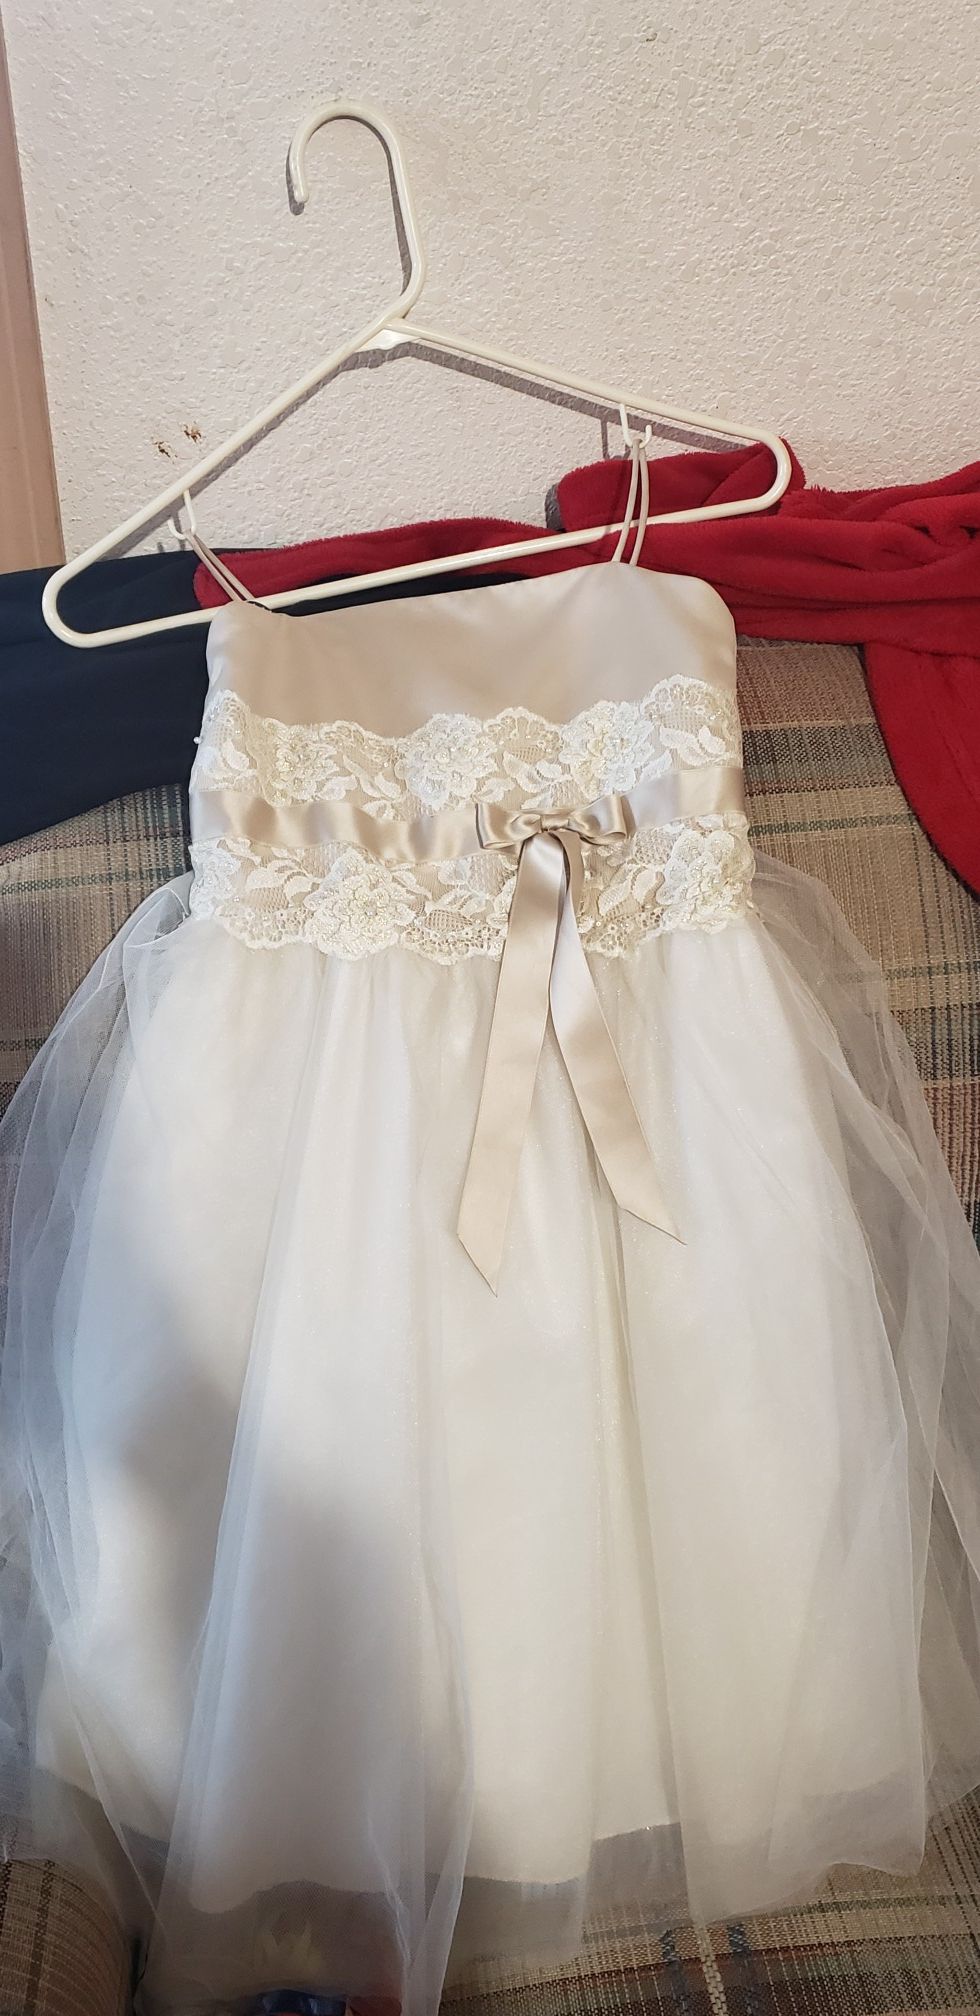 David's bridal dress